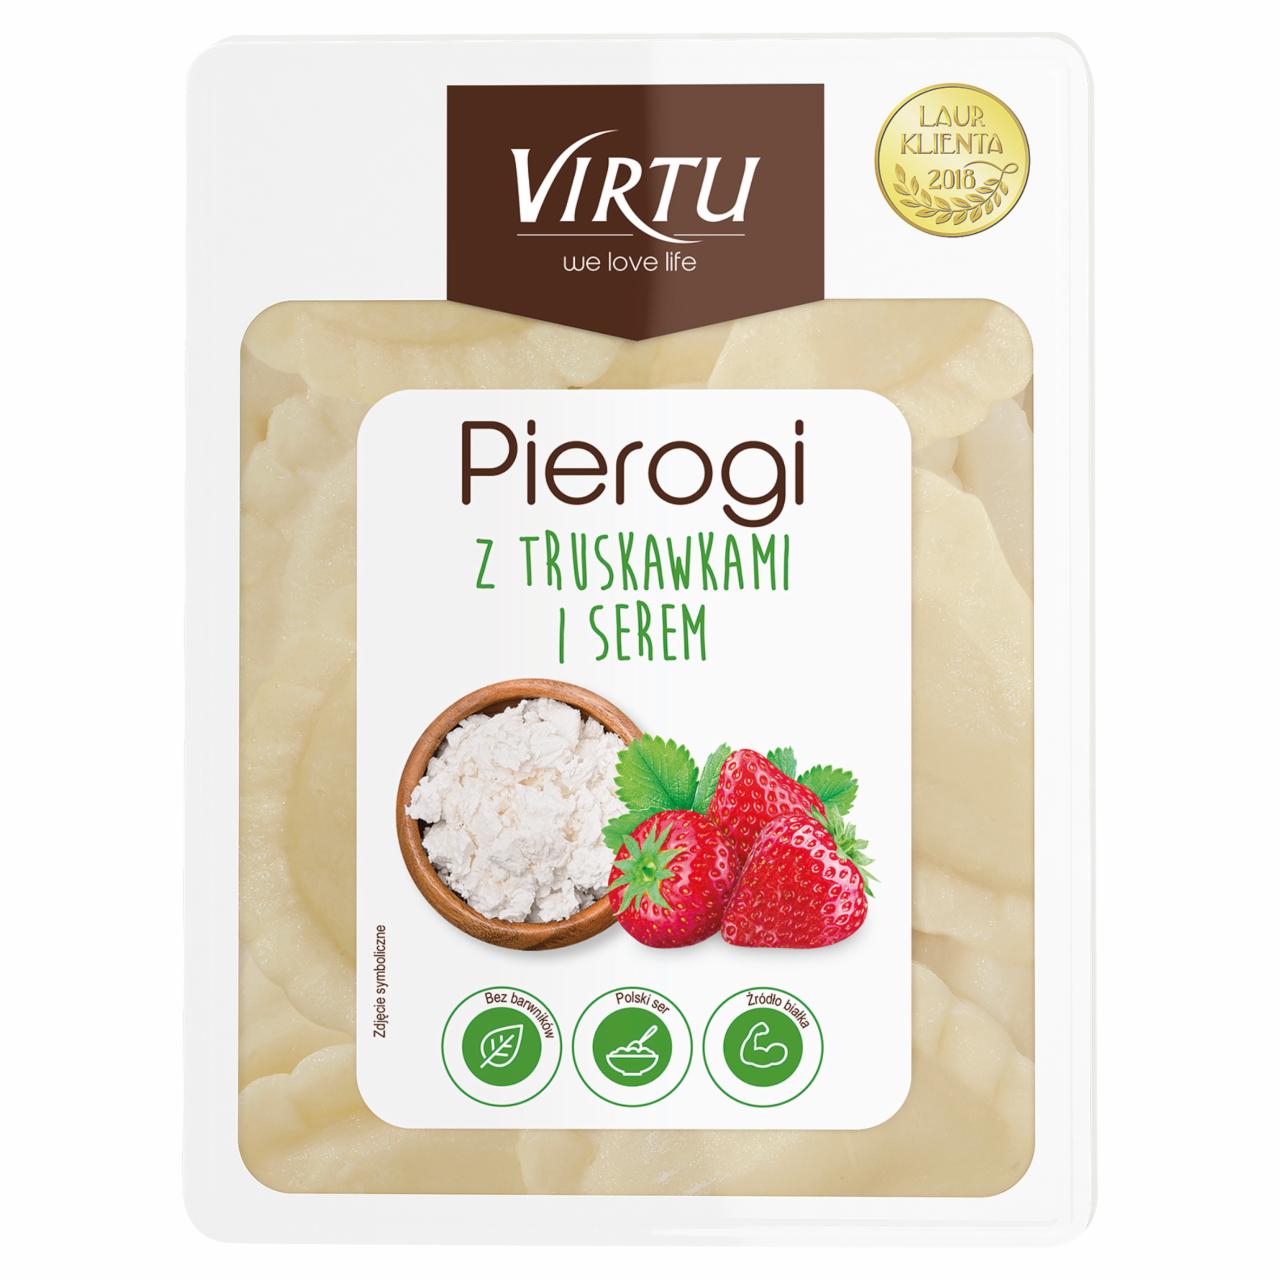 Zdjęcia - Virtu Pierogi z truskawkami i serem 400 g